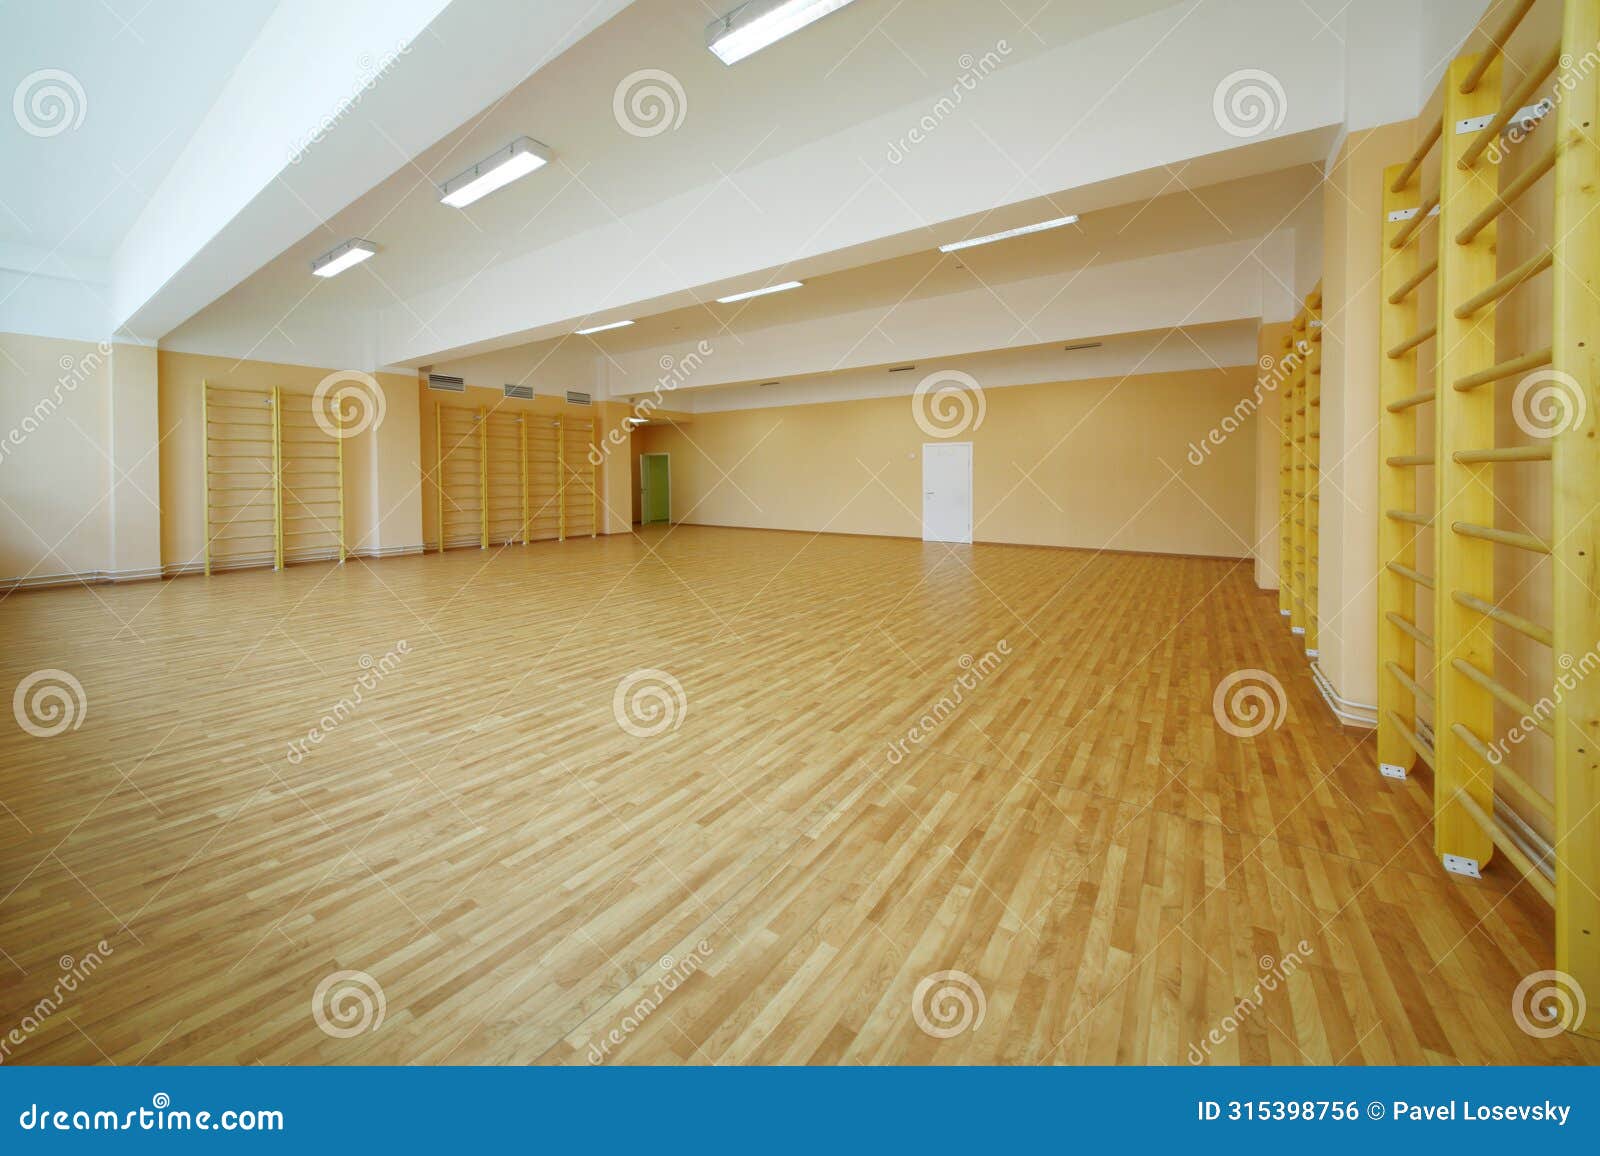 empty school gymnasium floor with yellow and